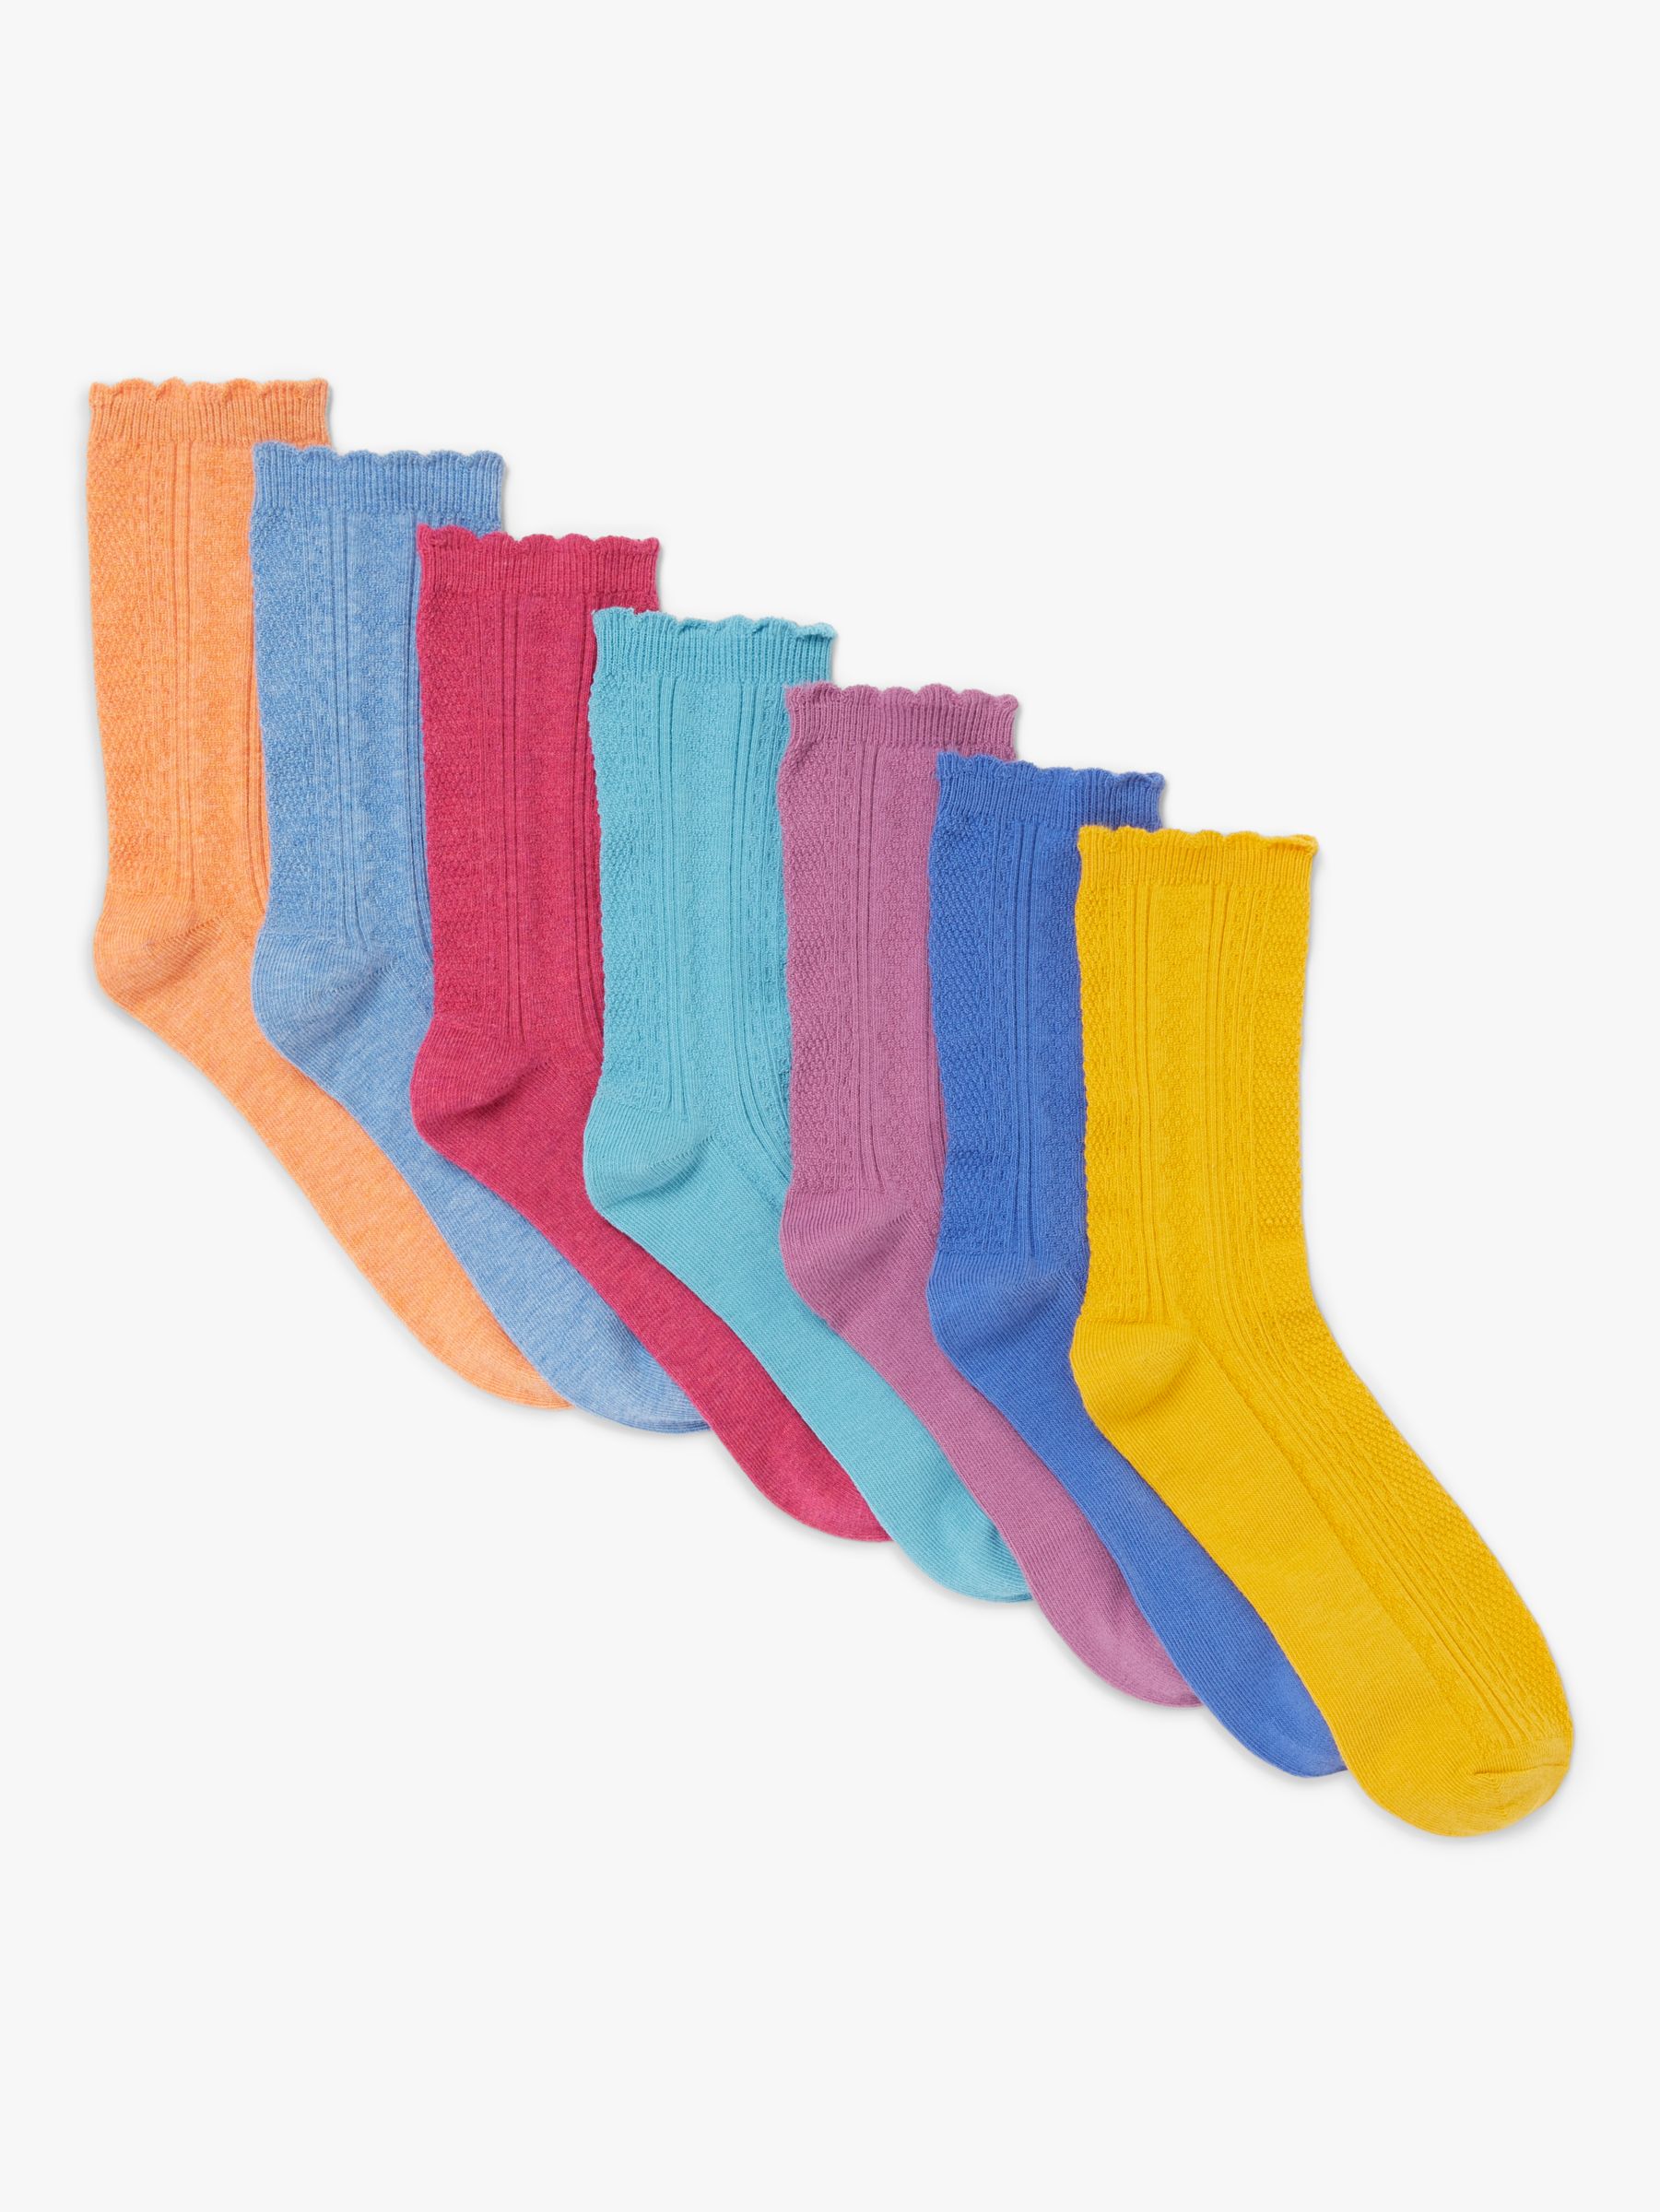 John Lewis Kids' Textured Marl Socks, Pack of 7, Multi